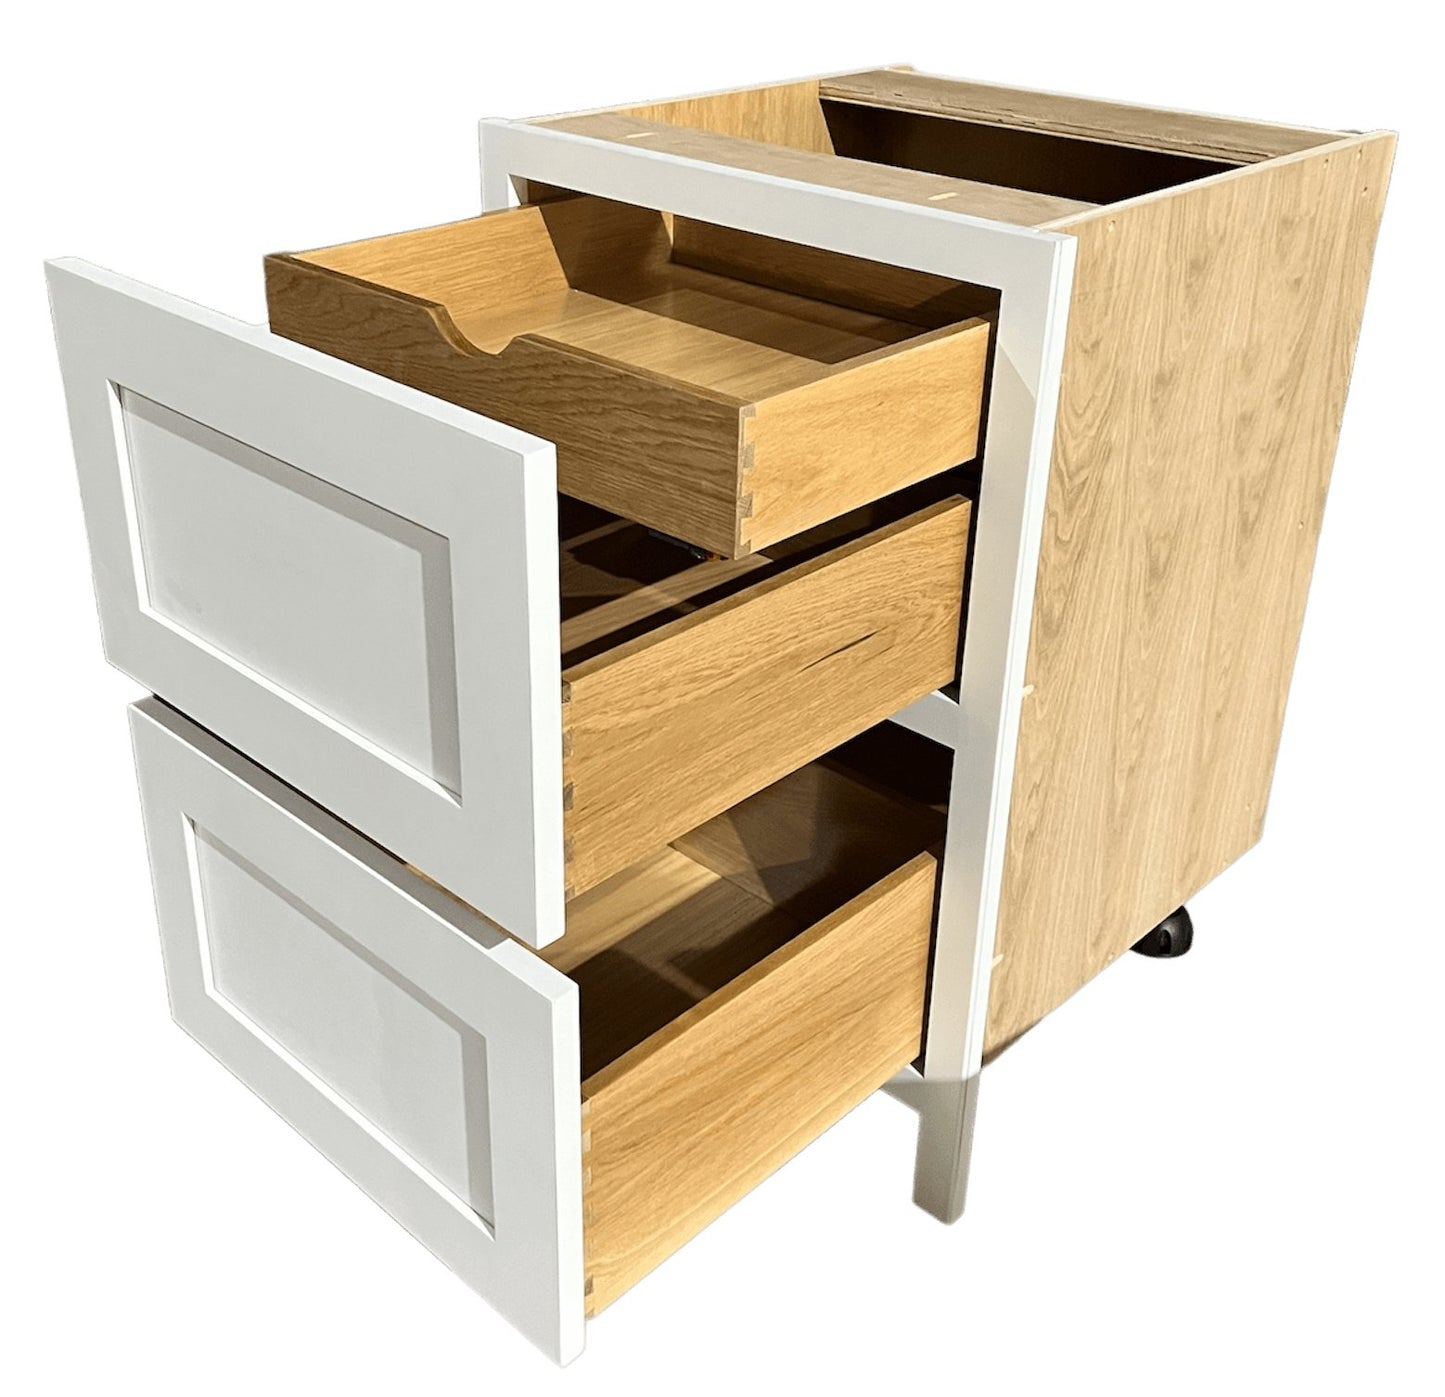 BD2 600 - 600mm Wide 2 drawer base plus a hidden internal drawer (Bespoke) - Classic Kitchens Direct